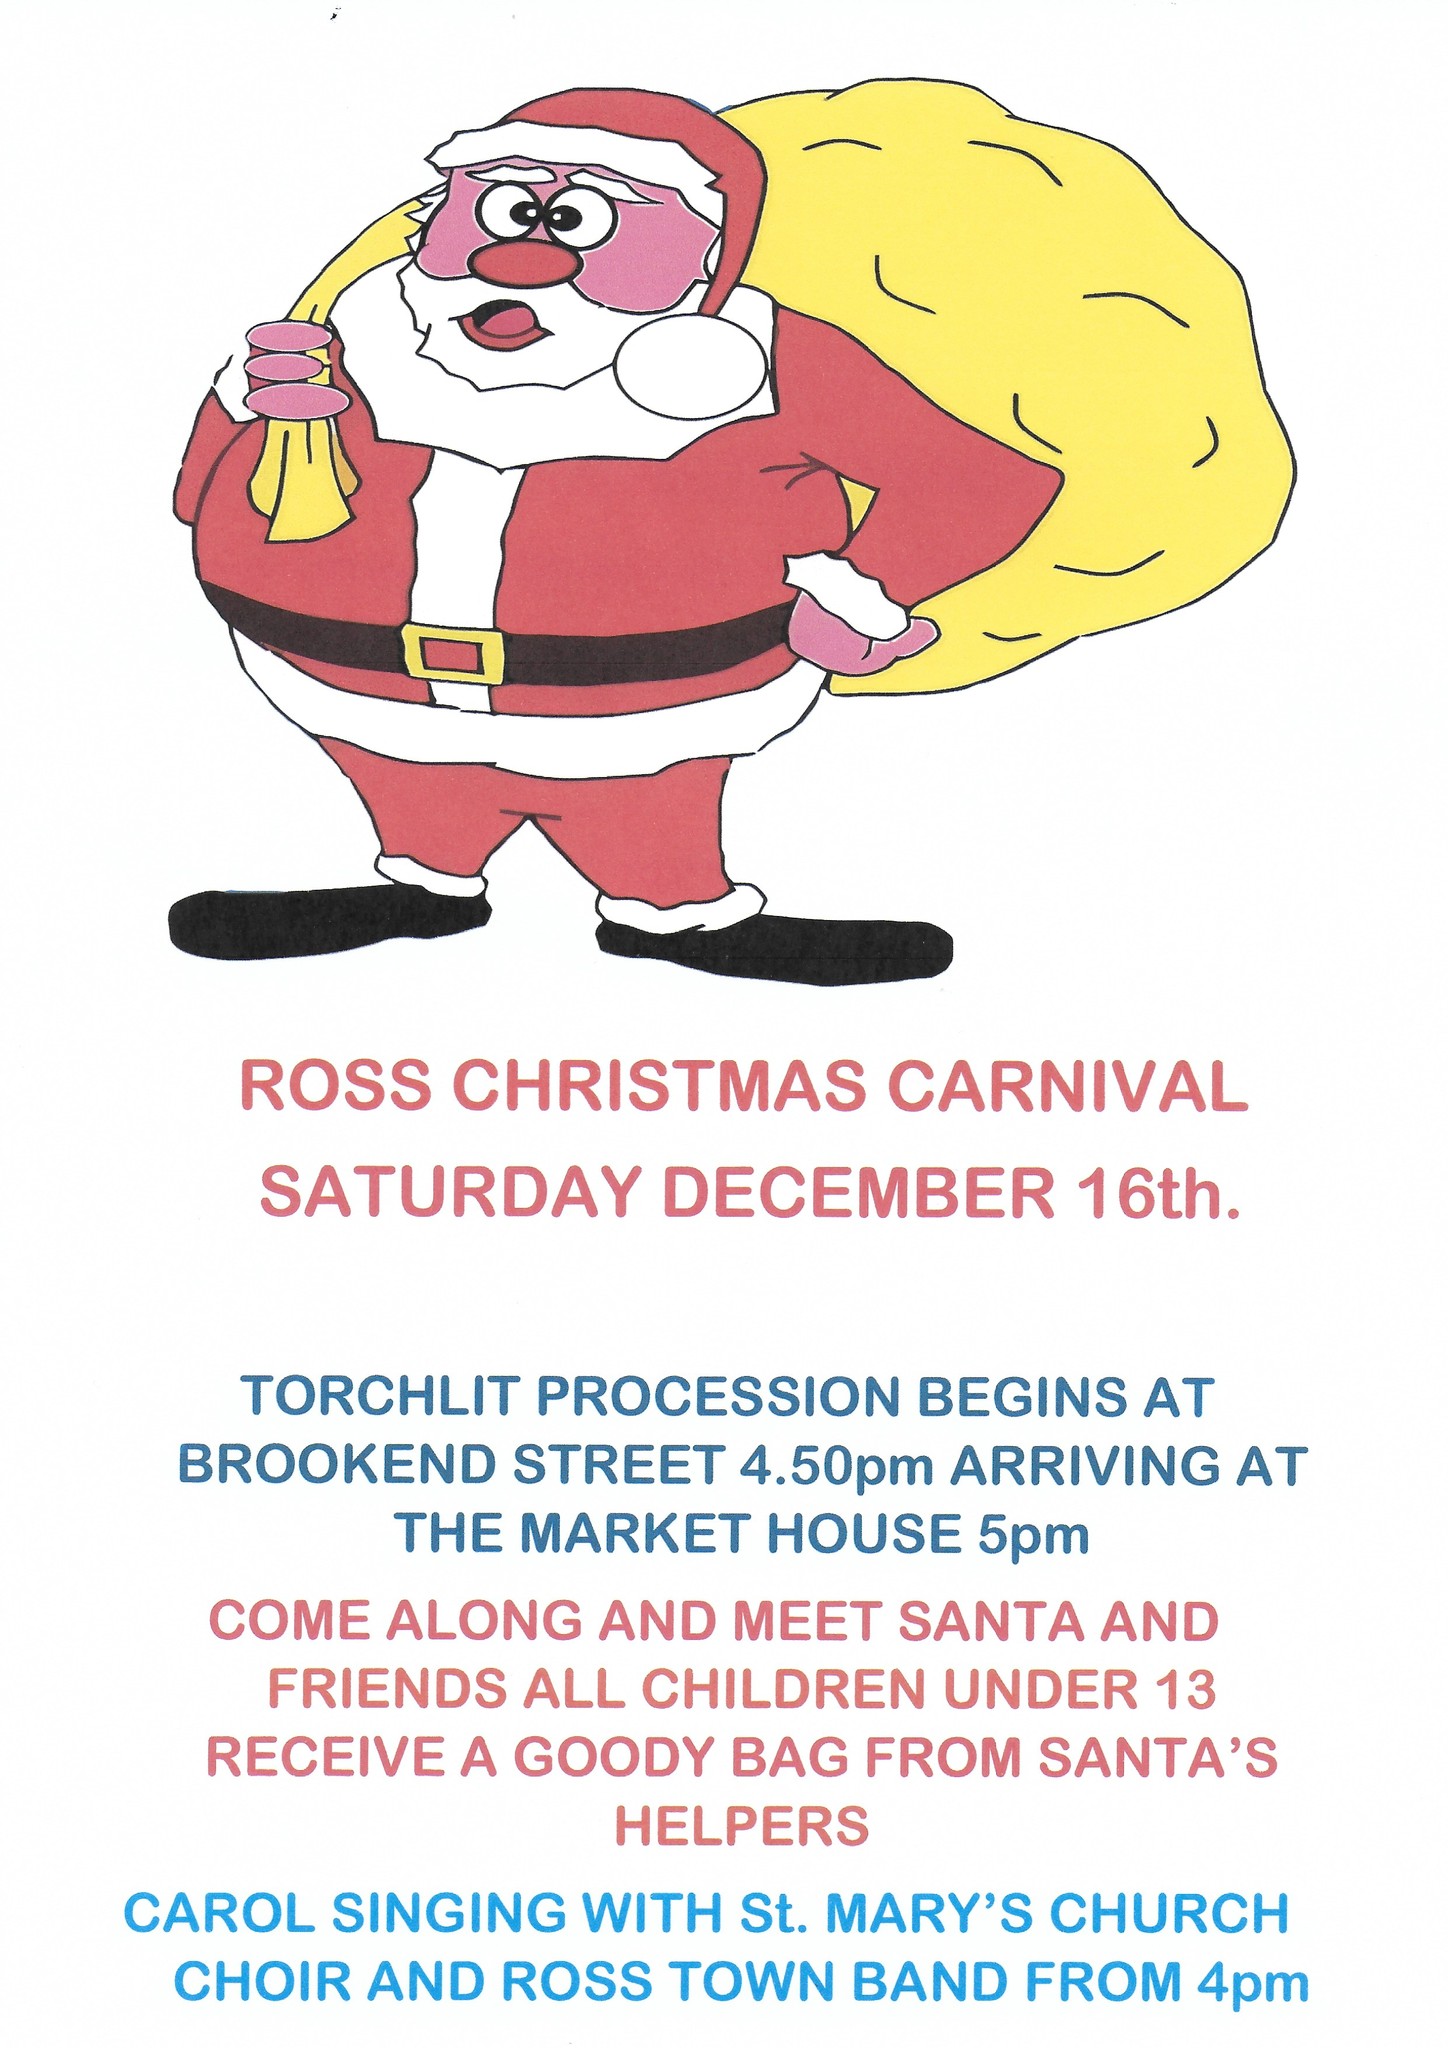 Christmas Carnival information